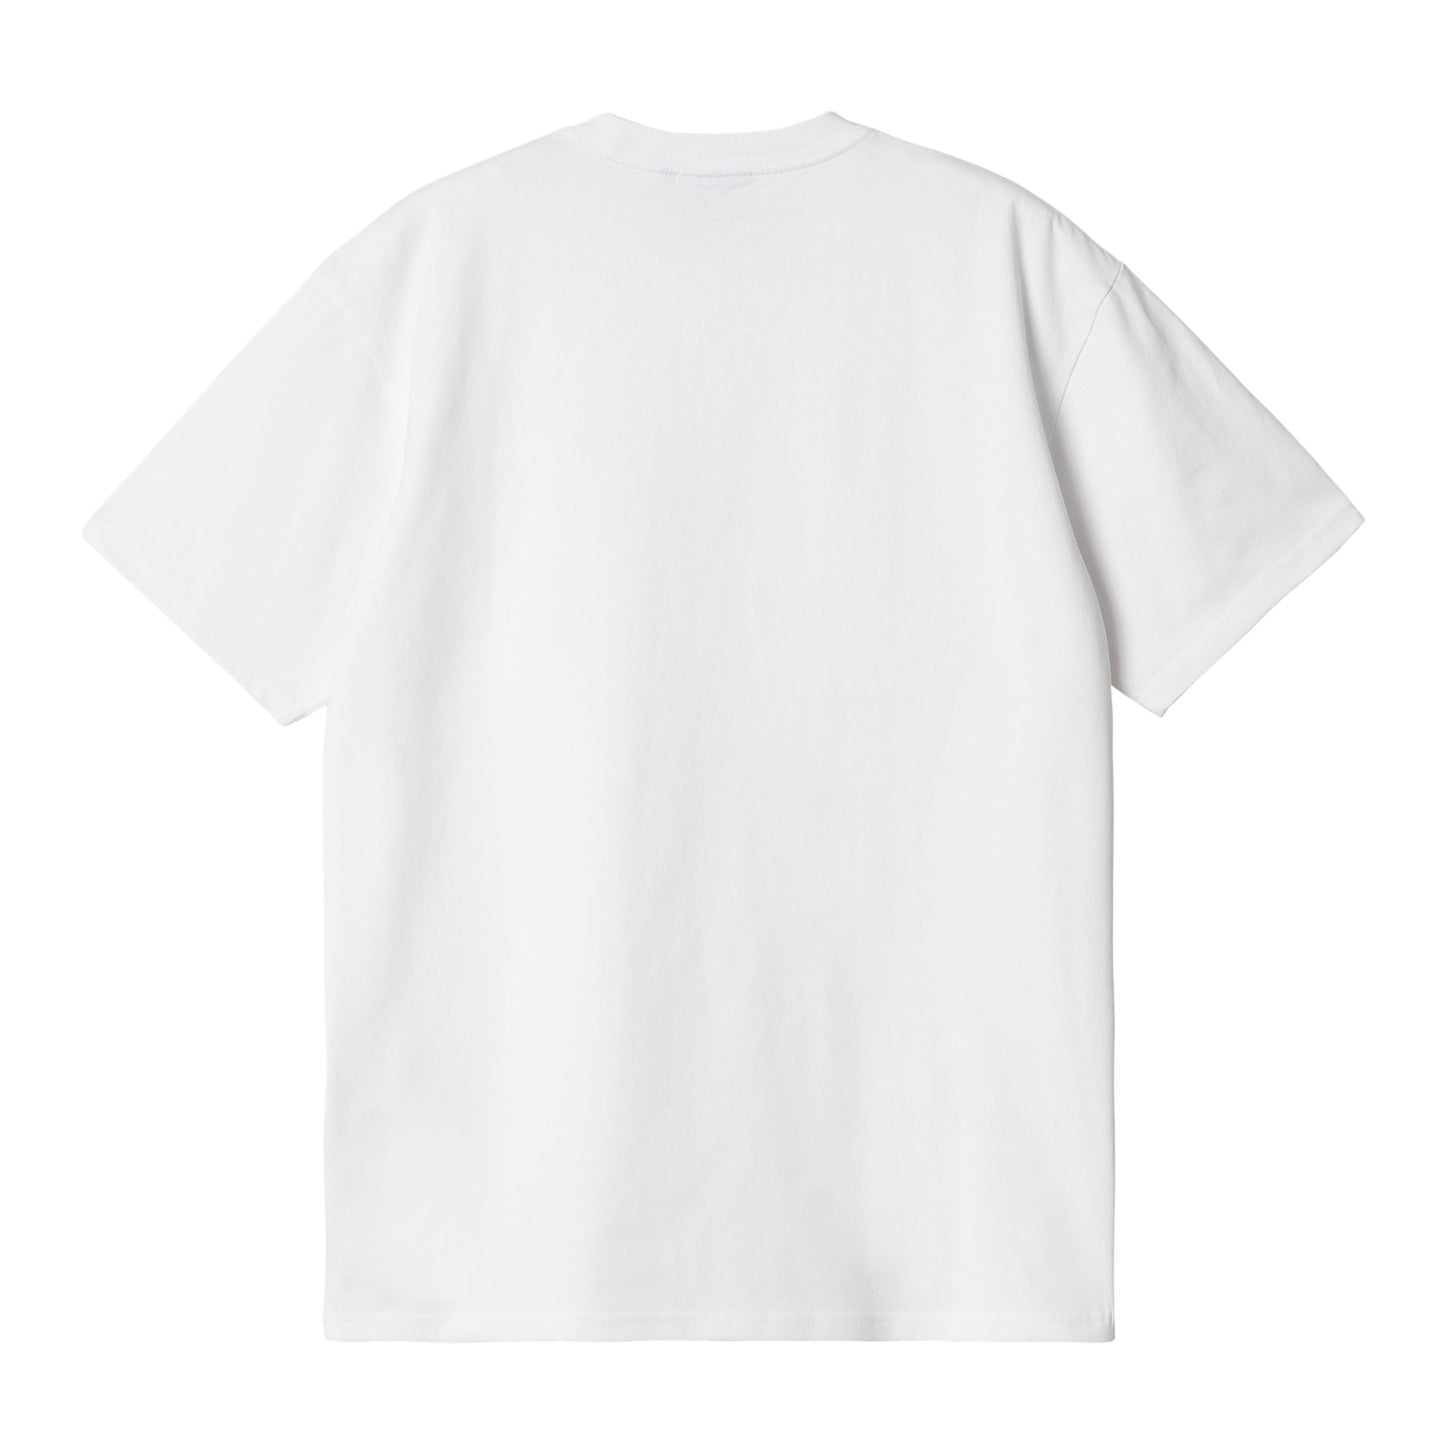 Carhartt Wip S/S Duster Script T-Shirt - White garment dyed